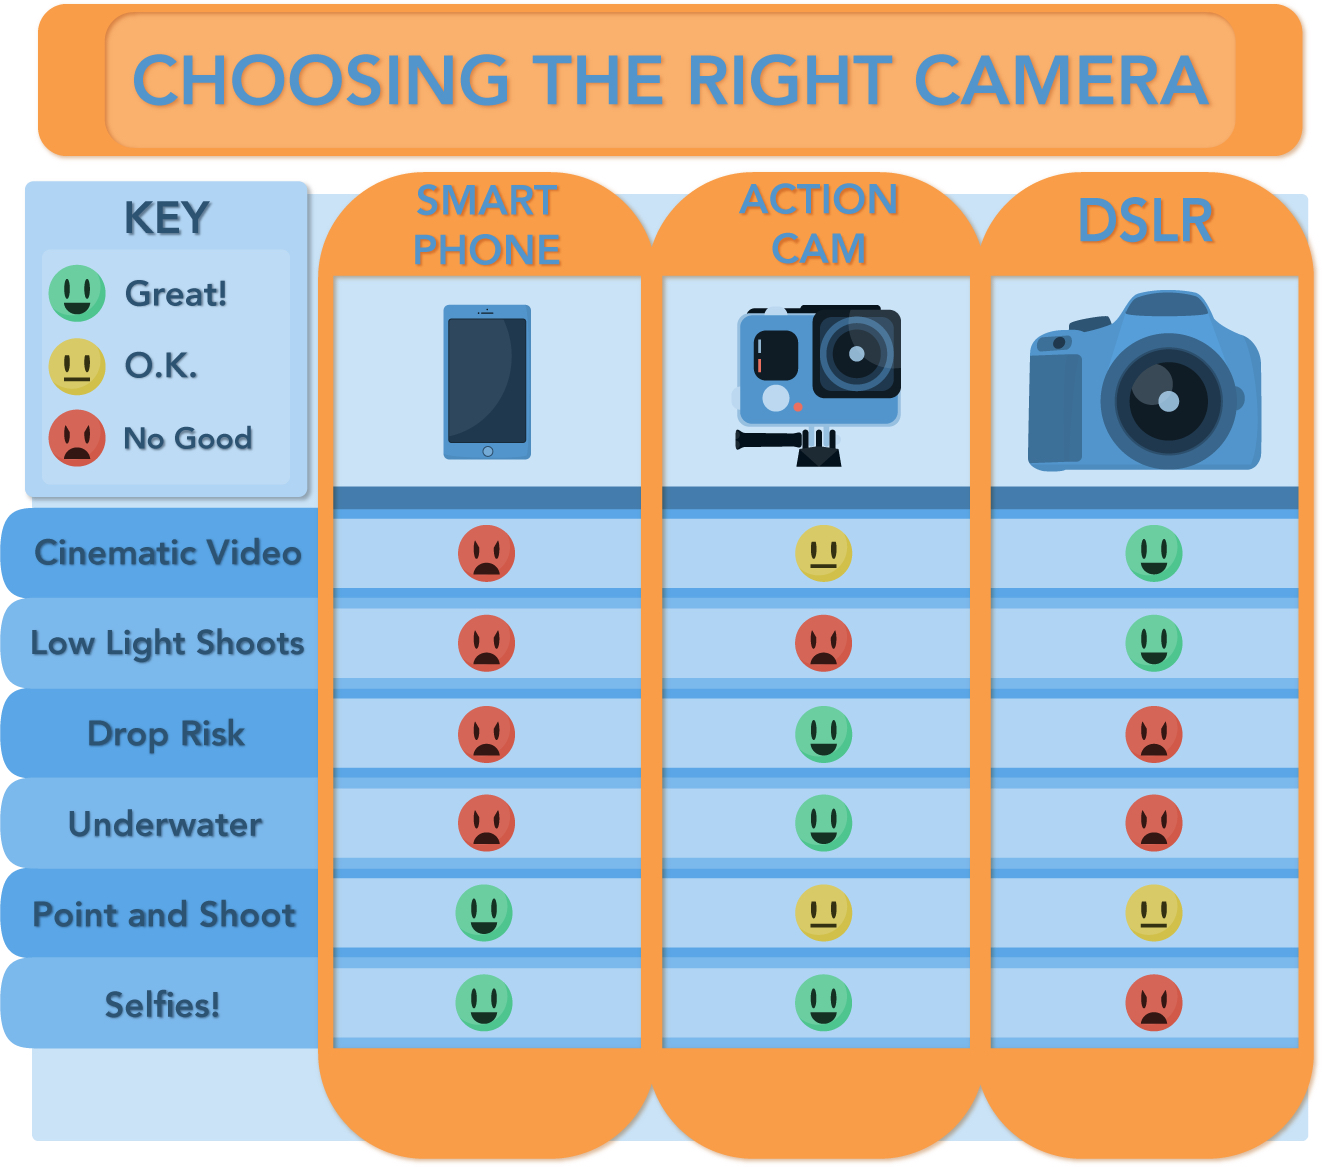 Camera Sensor Comparison Chart